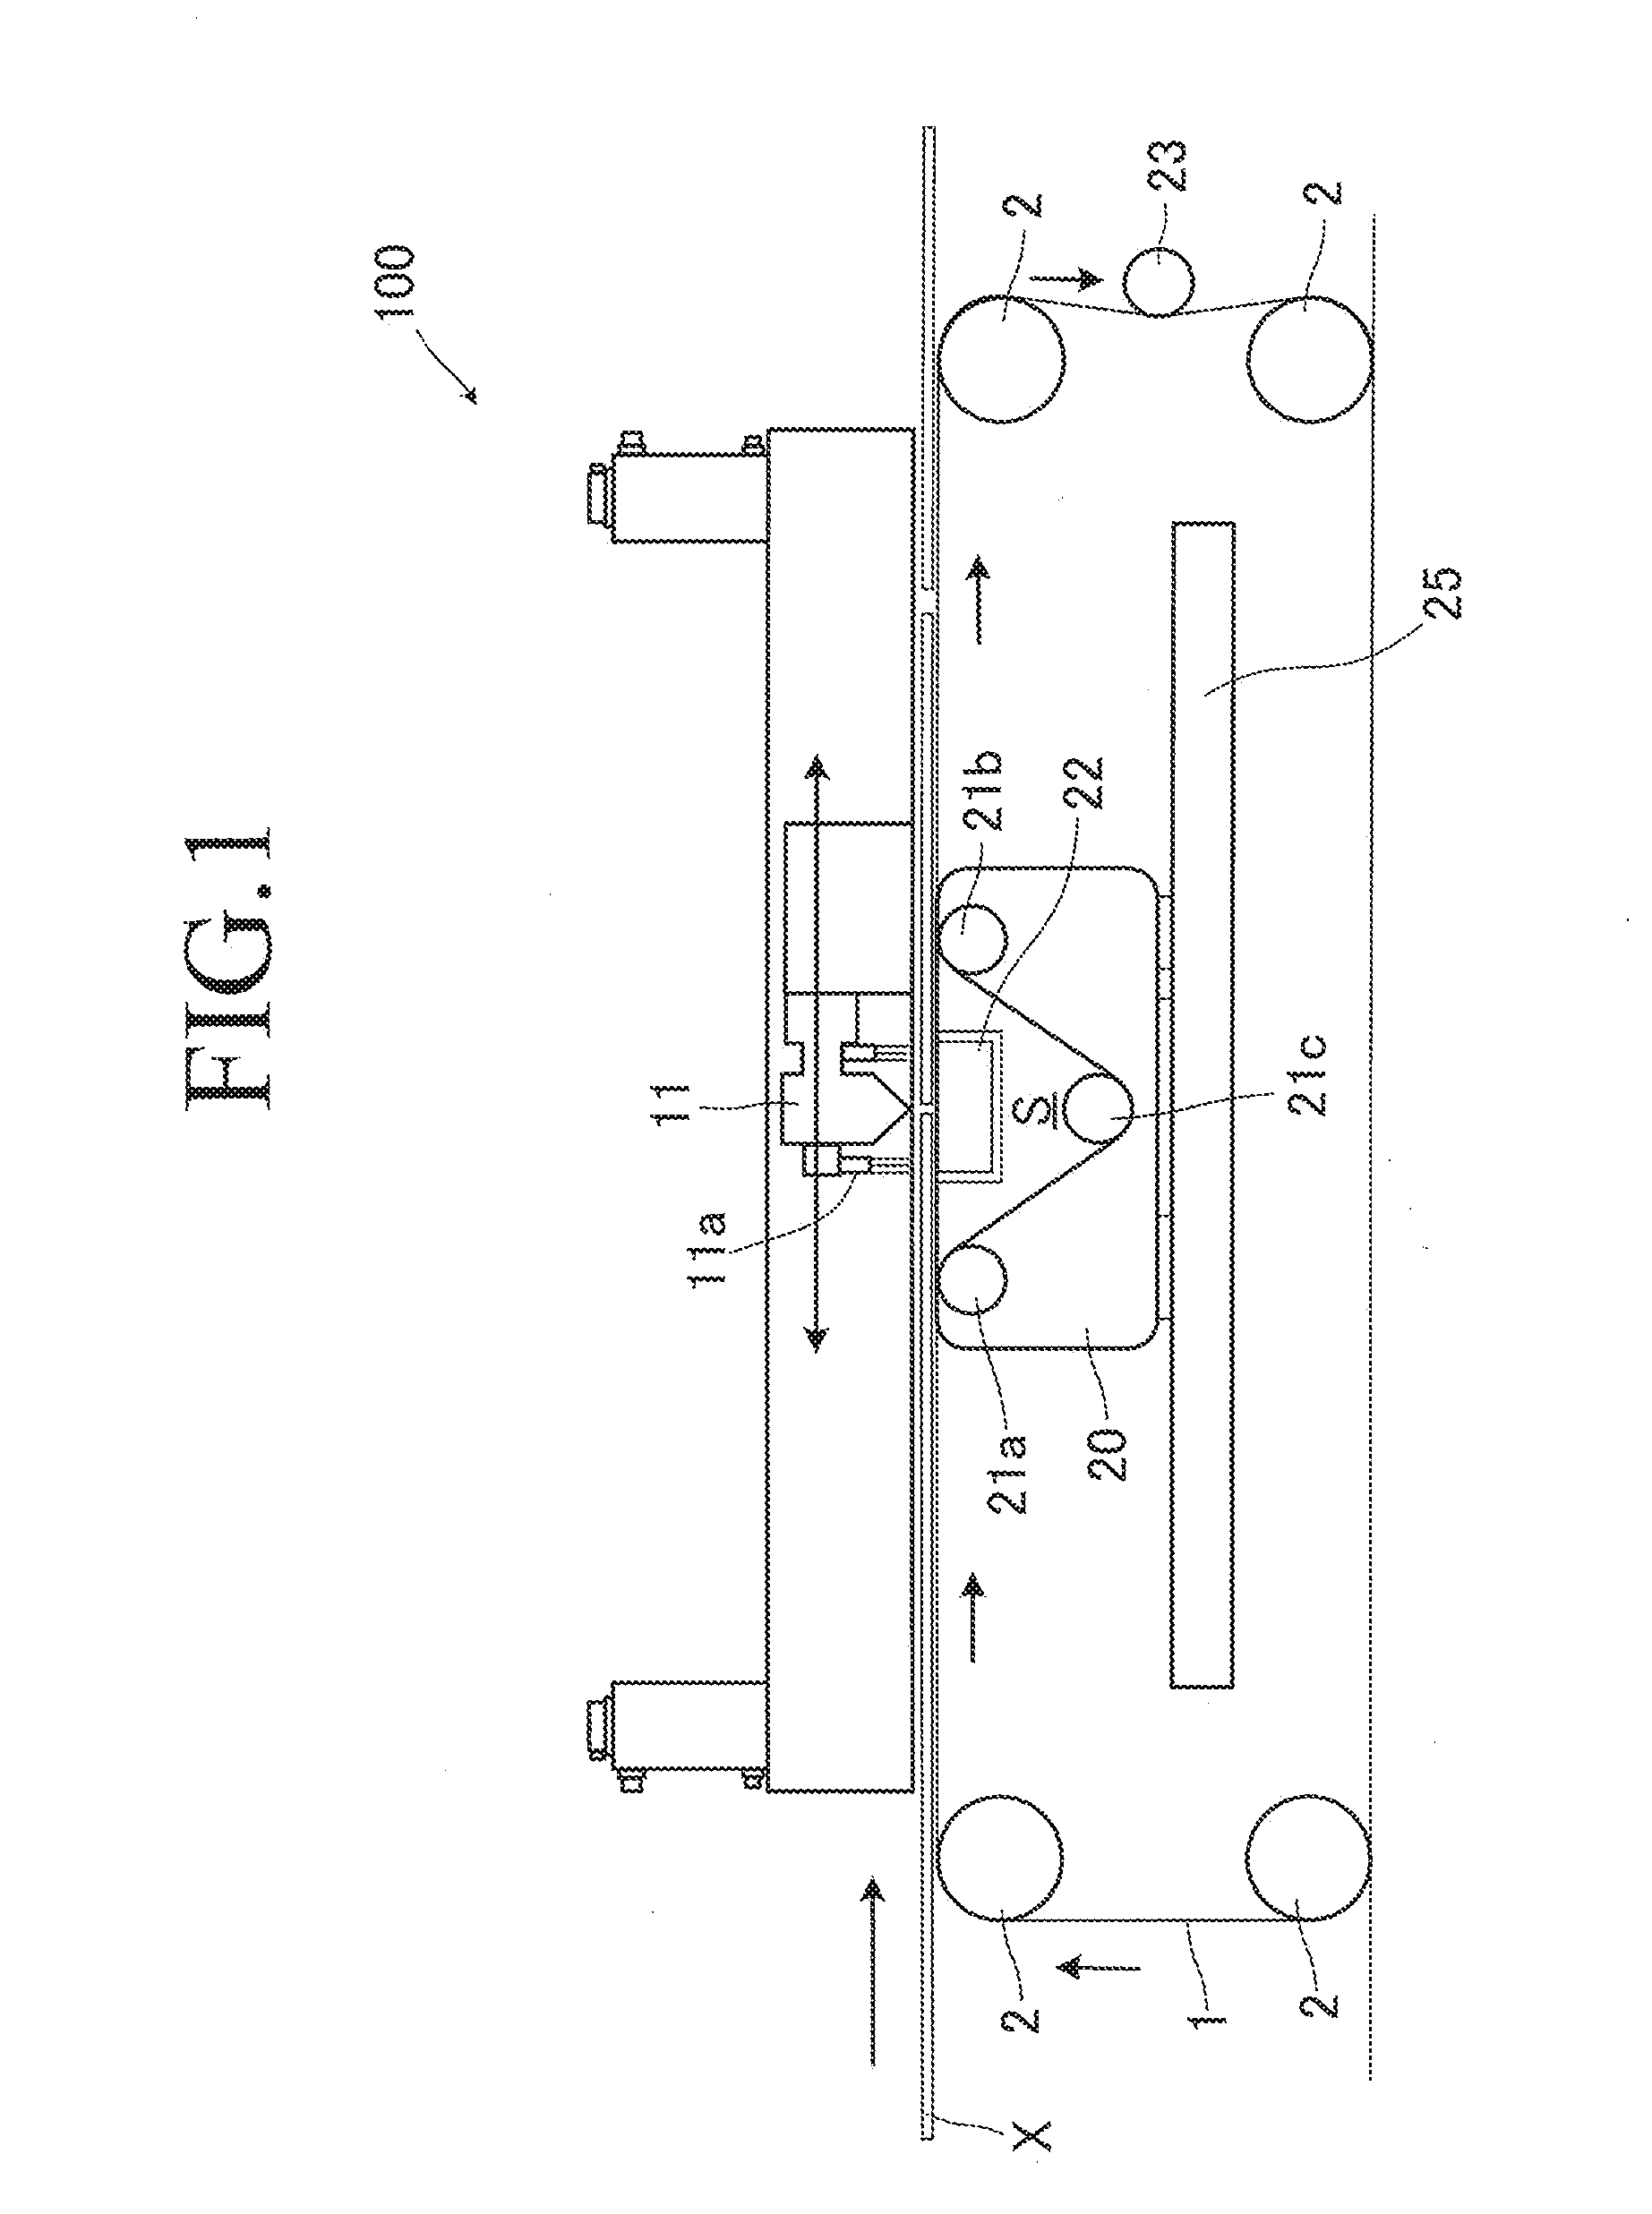 Laser blanking apparatus and processing method using same